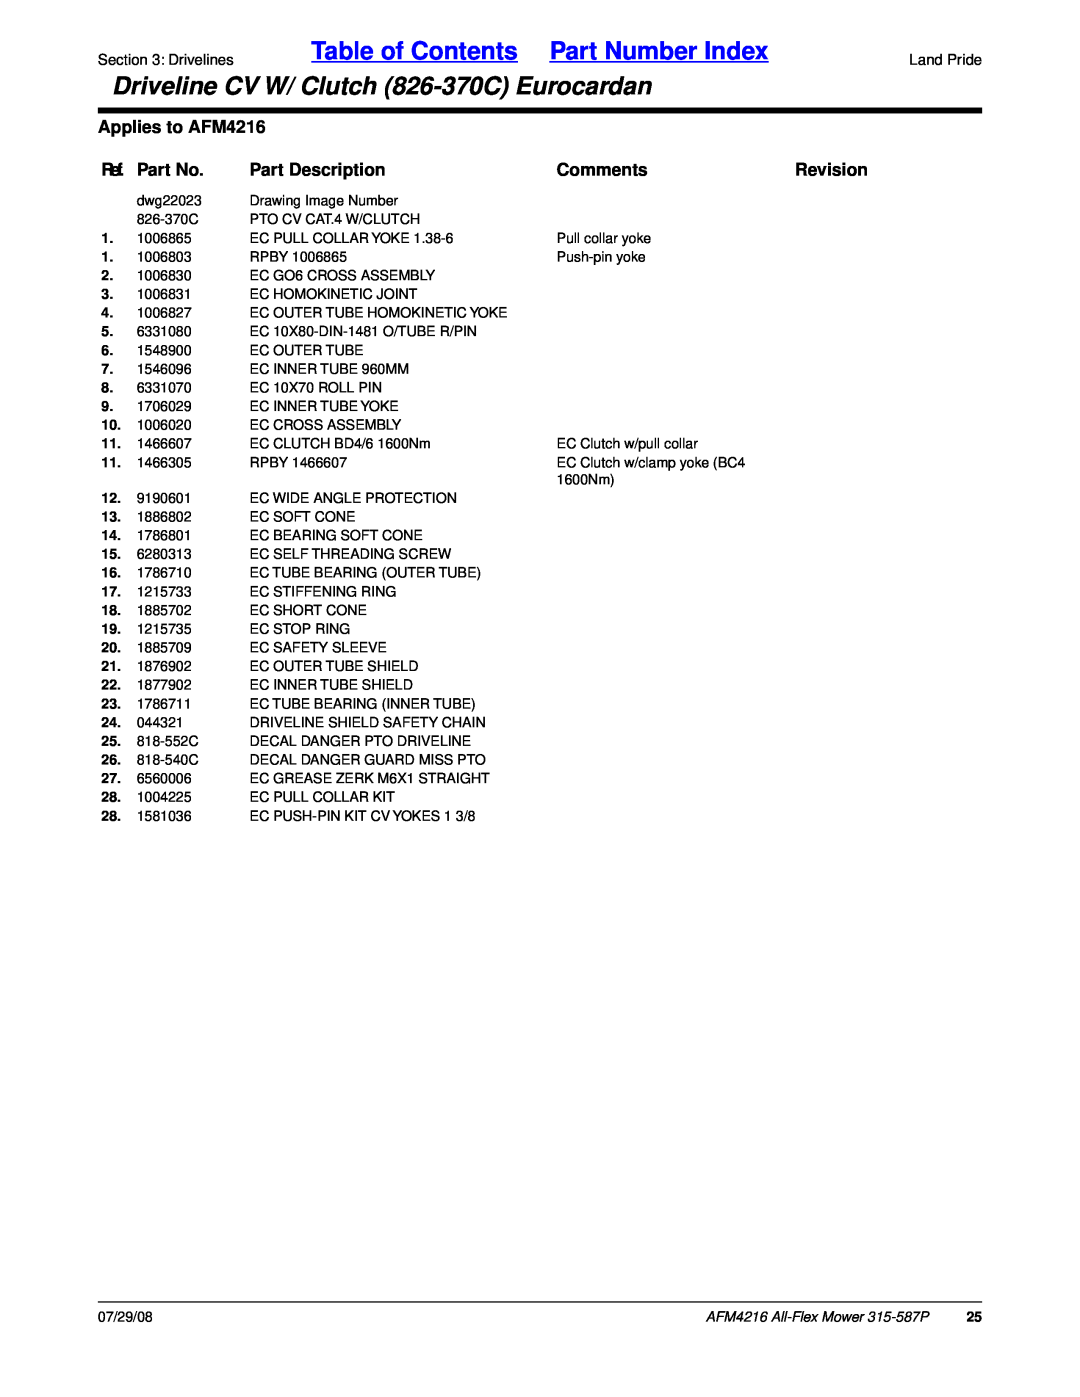 Land Pride Table of Contents Part Number Index, Driveline CV W/ Clutch 826-370CEurocardan, Applies to AFM4216, Comments 